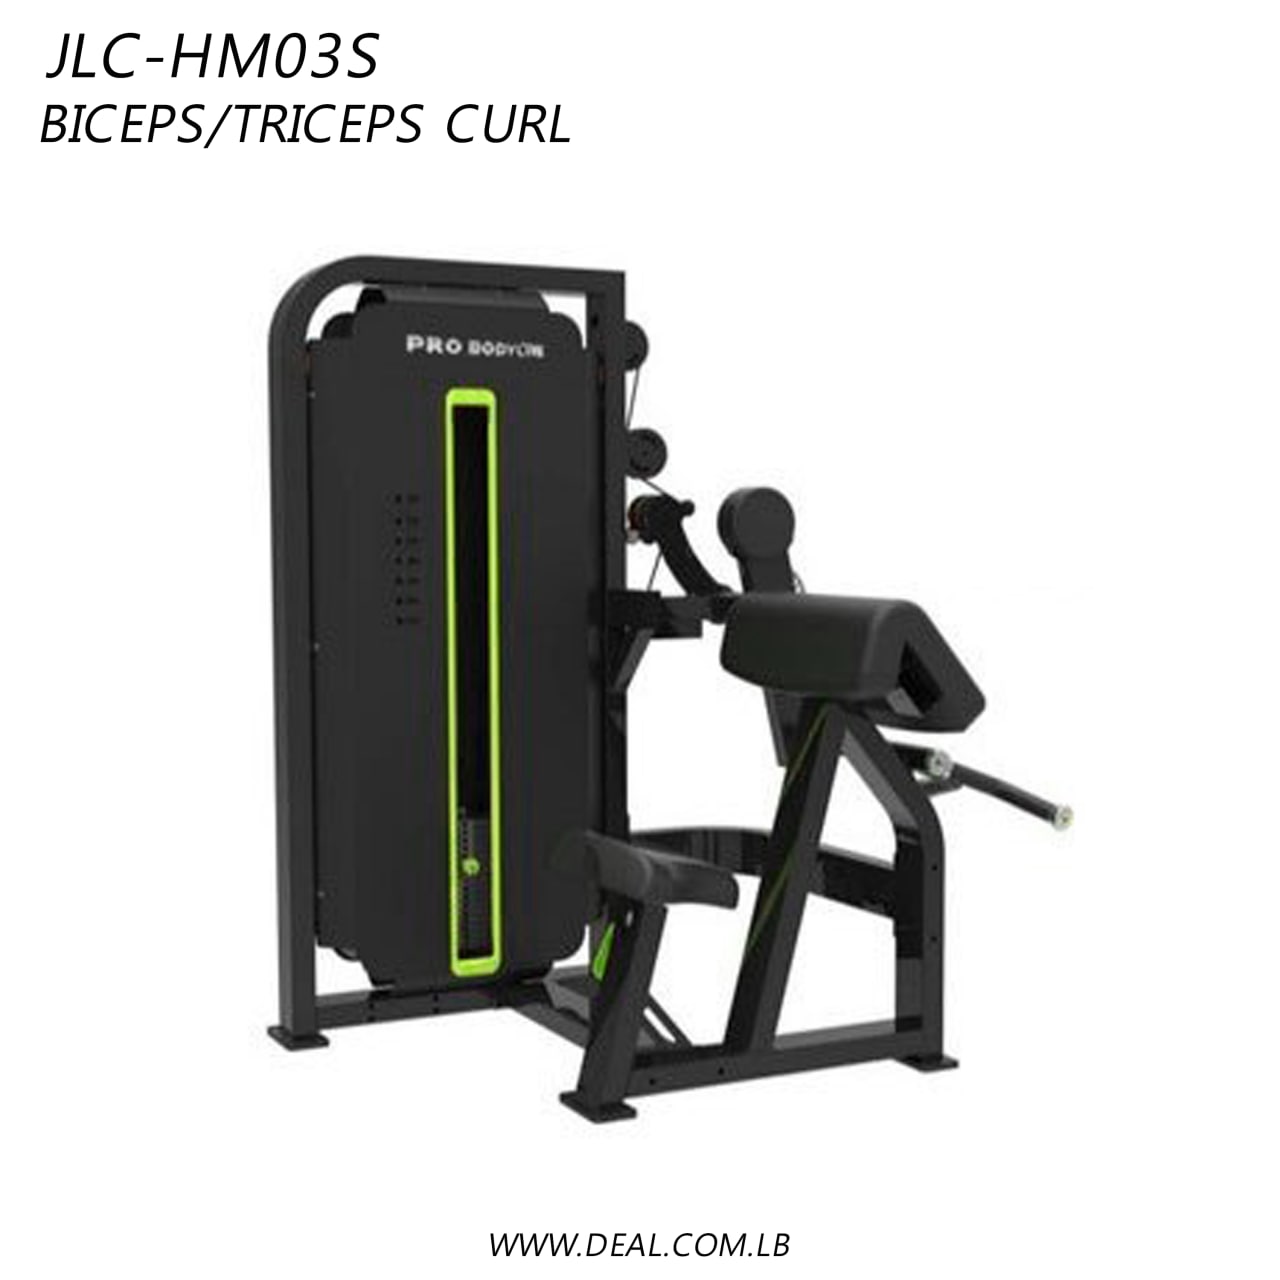 JLC-HM03S | Biceps Triceps Curl